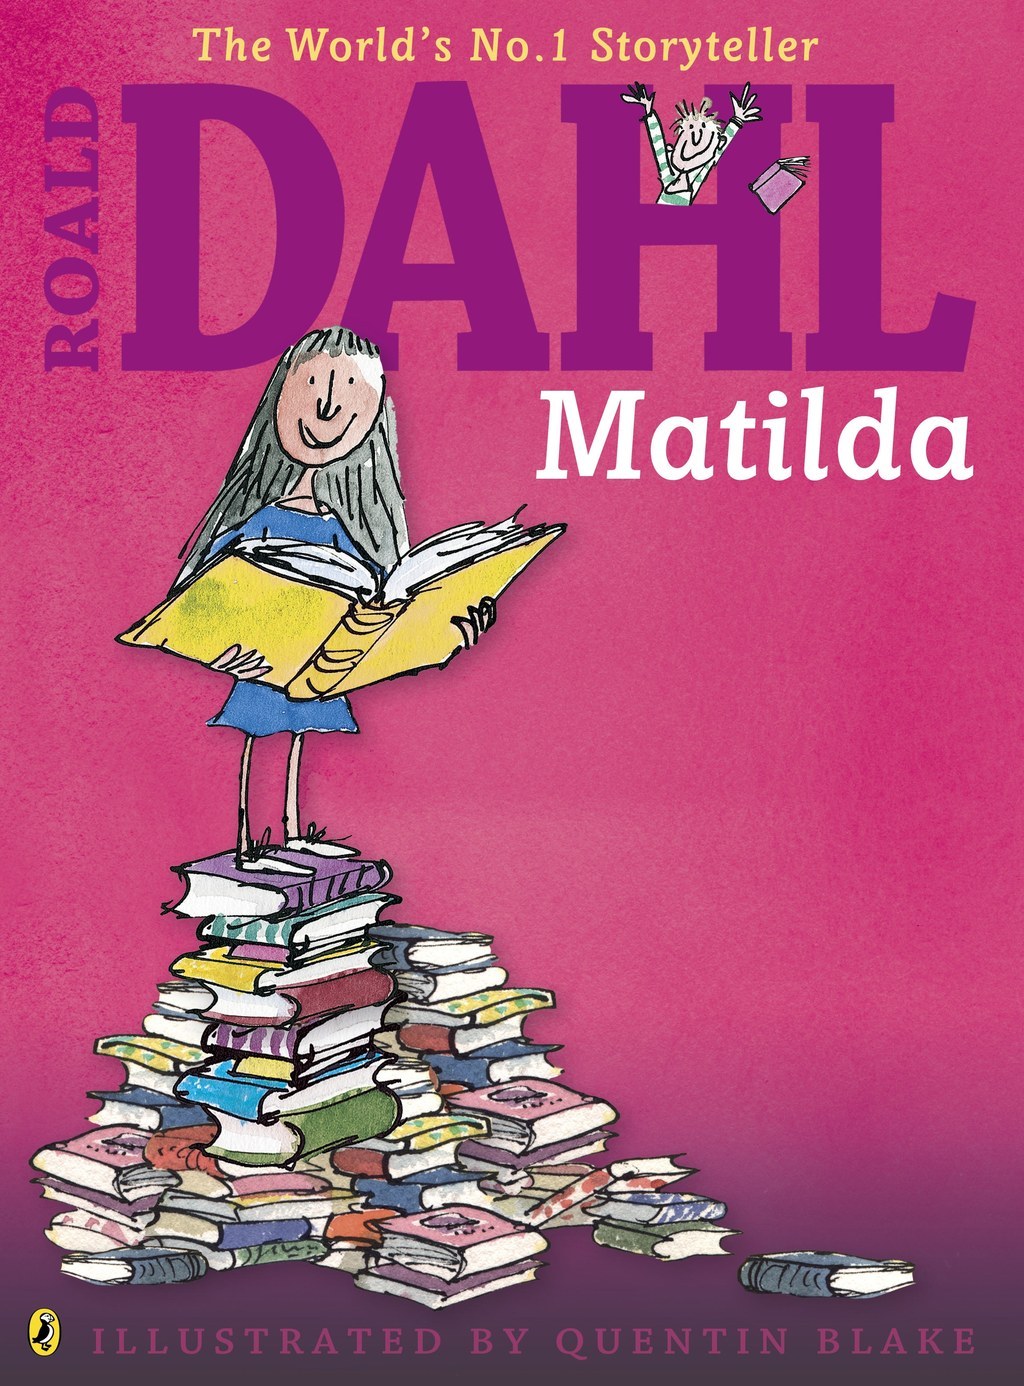 Matilda roald dahl. Matilda by Roald Dahl.